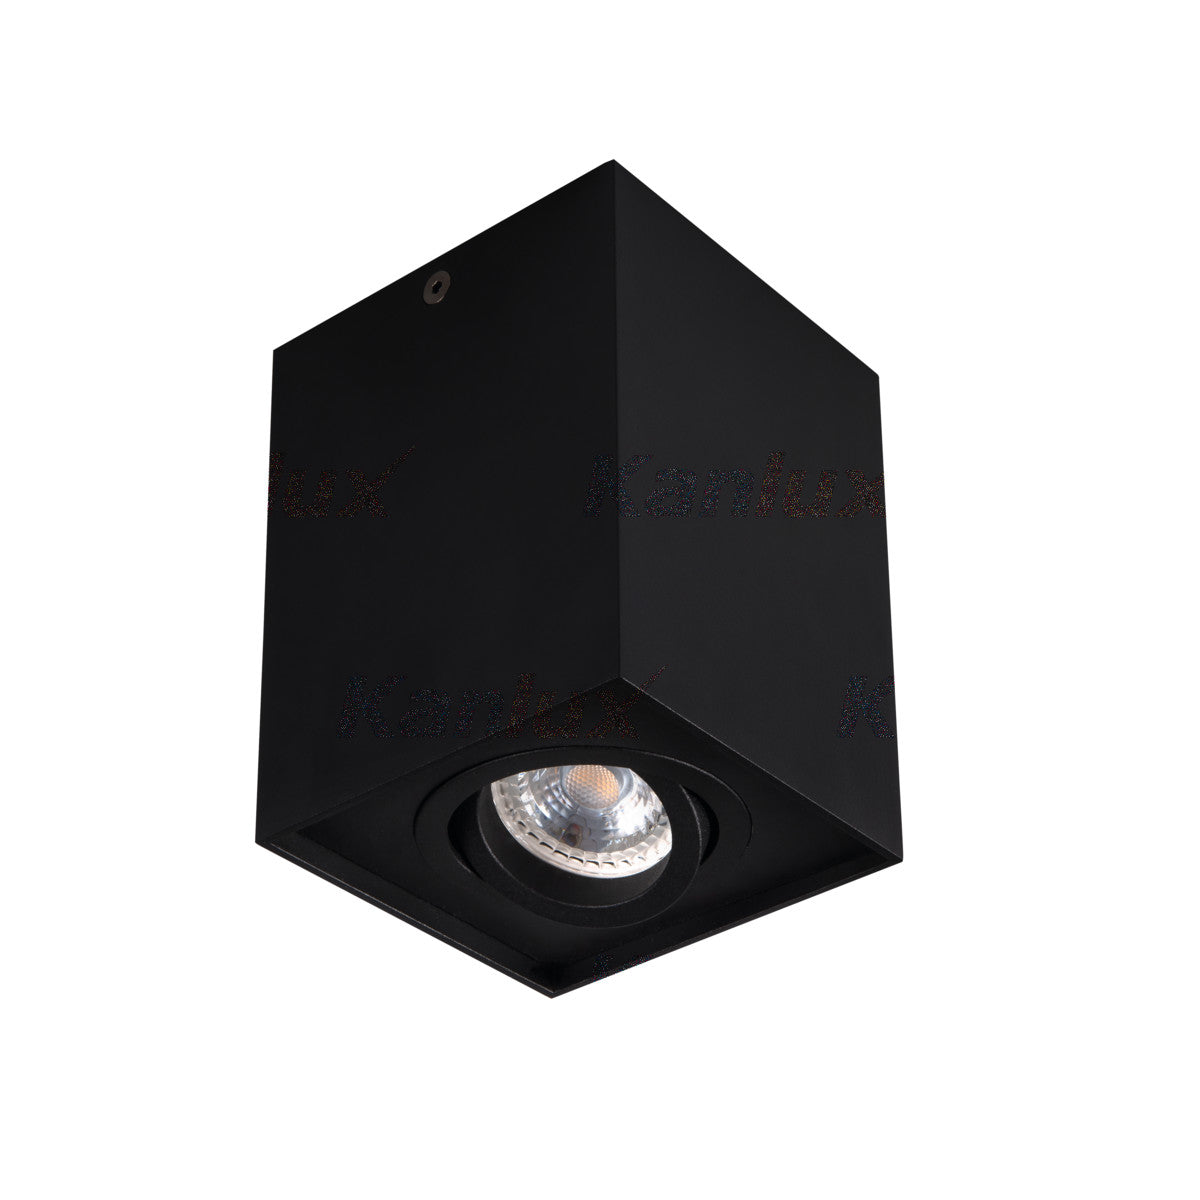 Kanlux GORD Adjustable Ceiling Mounted Spotlight Kitchen Shop Retail Display Light Fitting